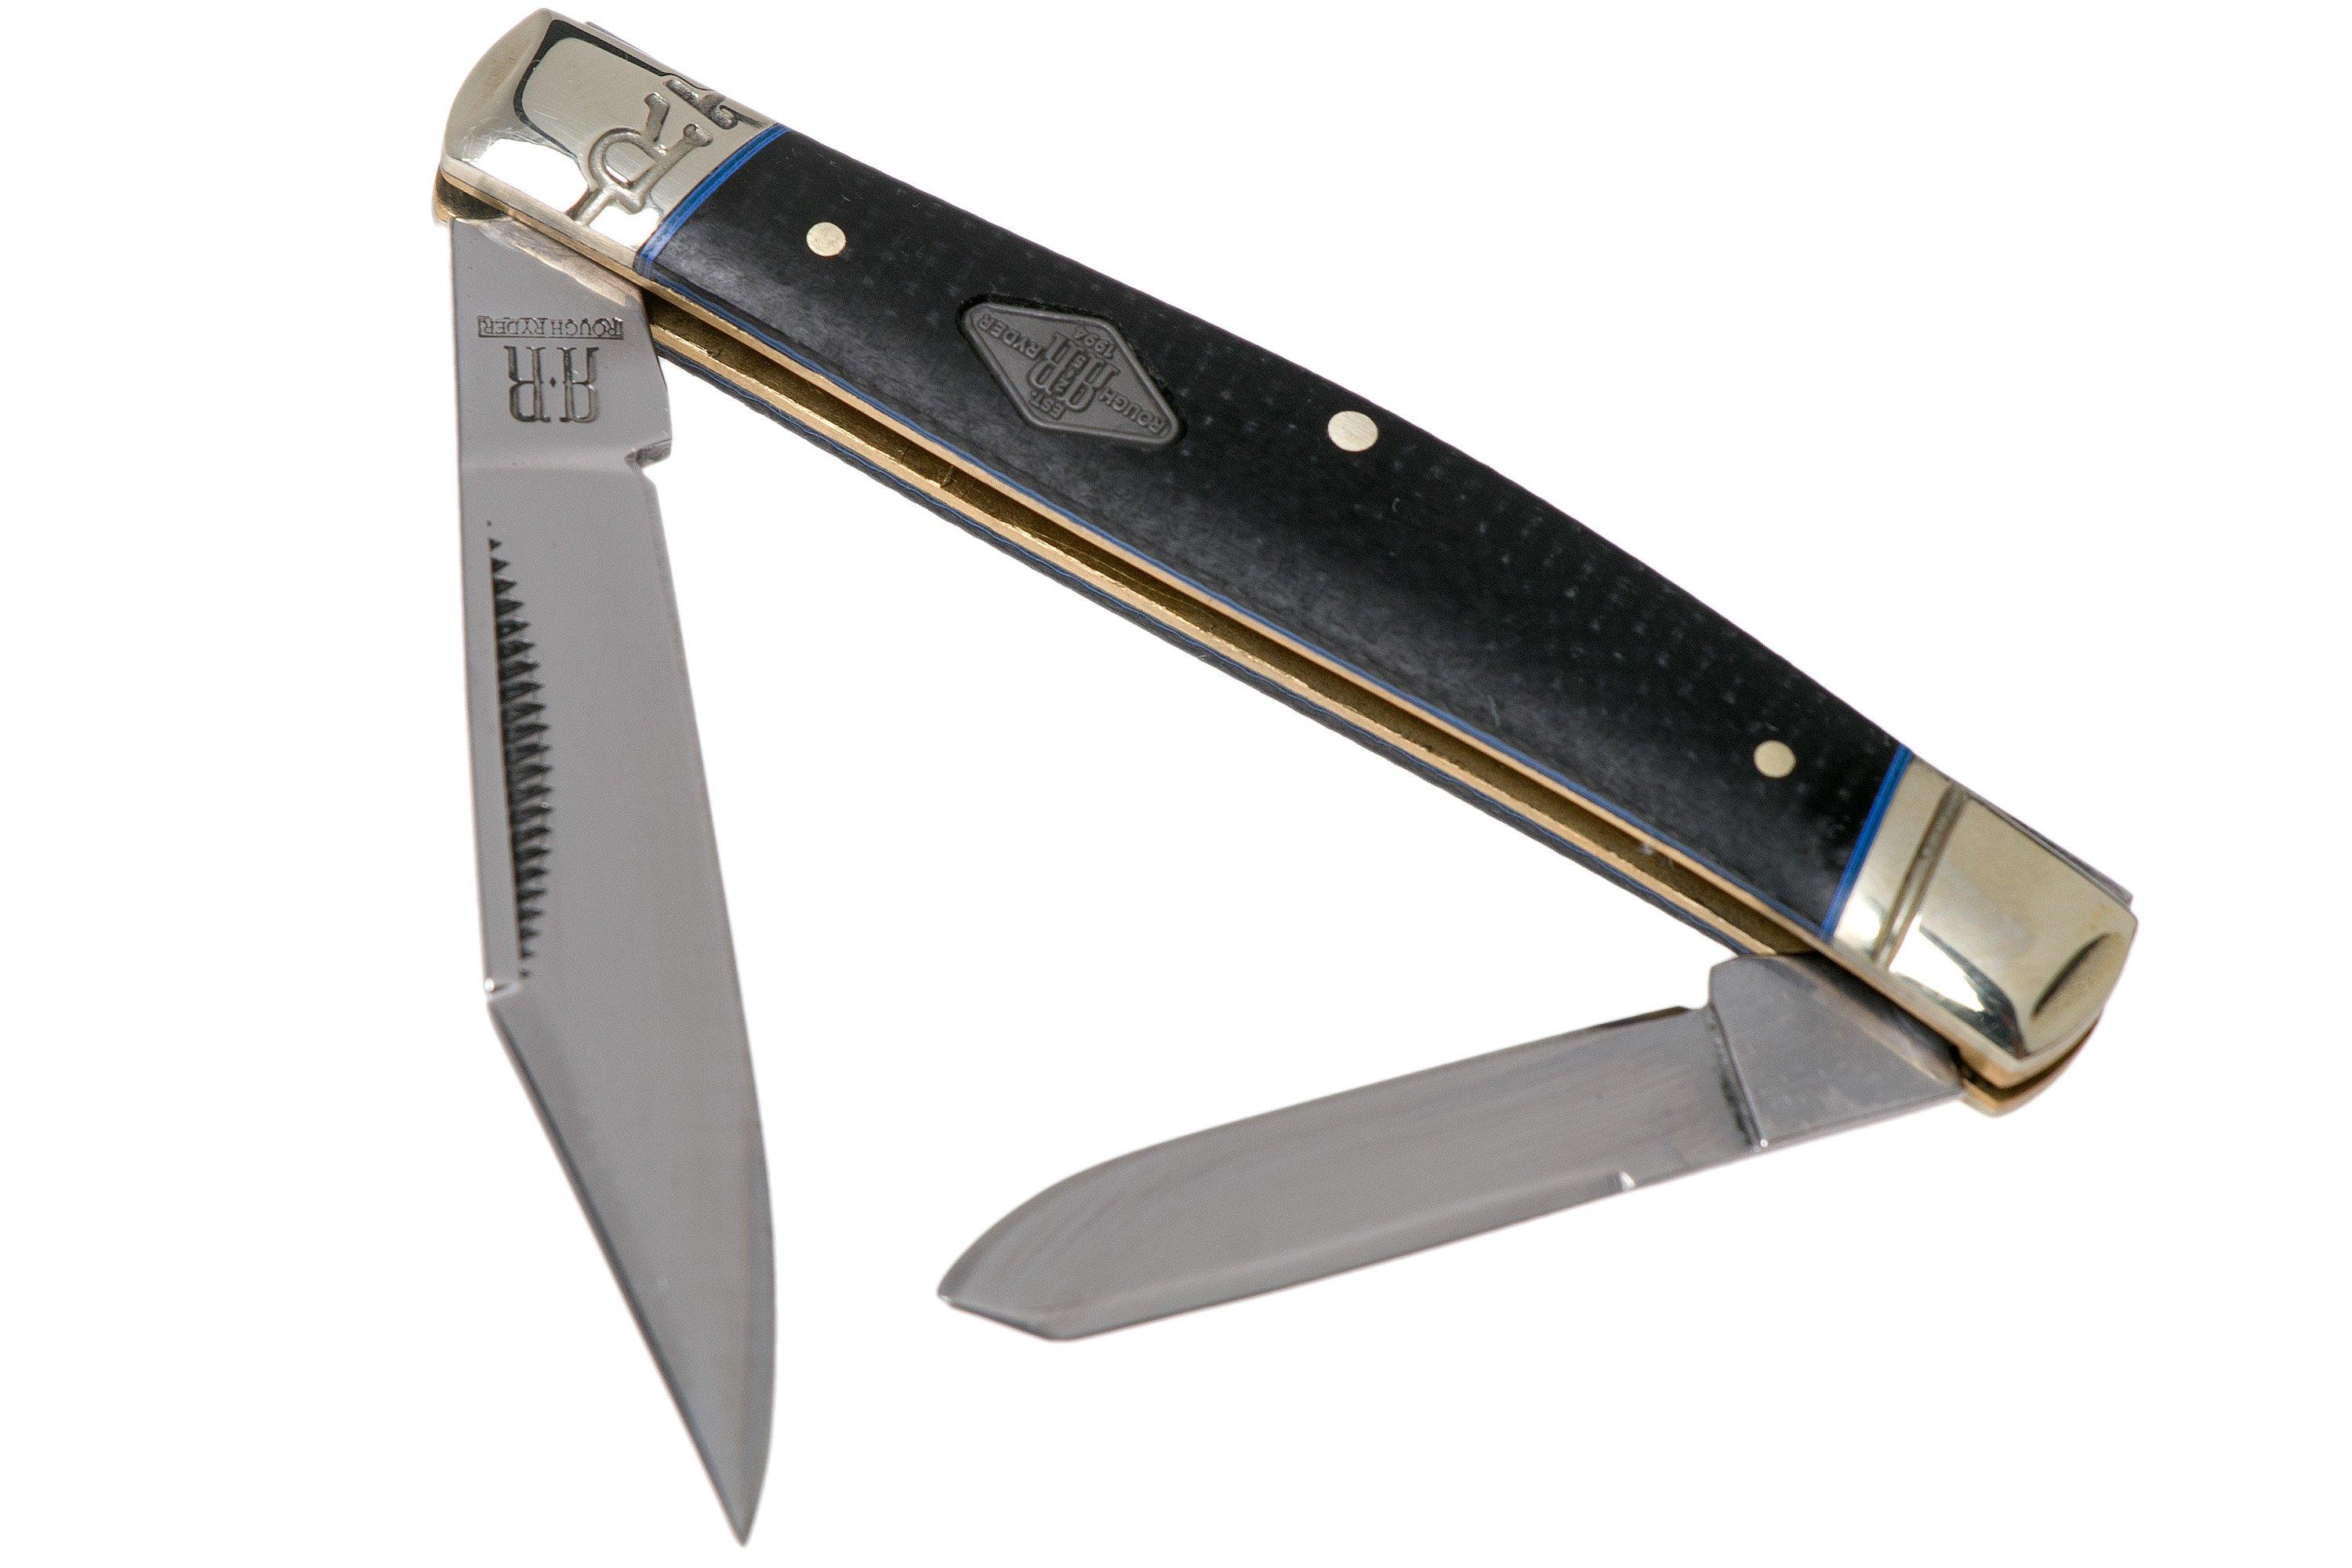 Rough Ryder Classic Carbon II Pen Knife RR2211 coltello da tasca